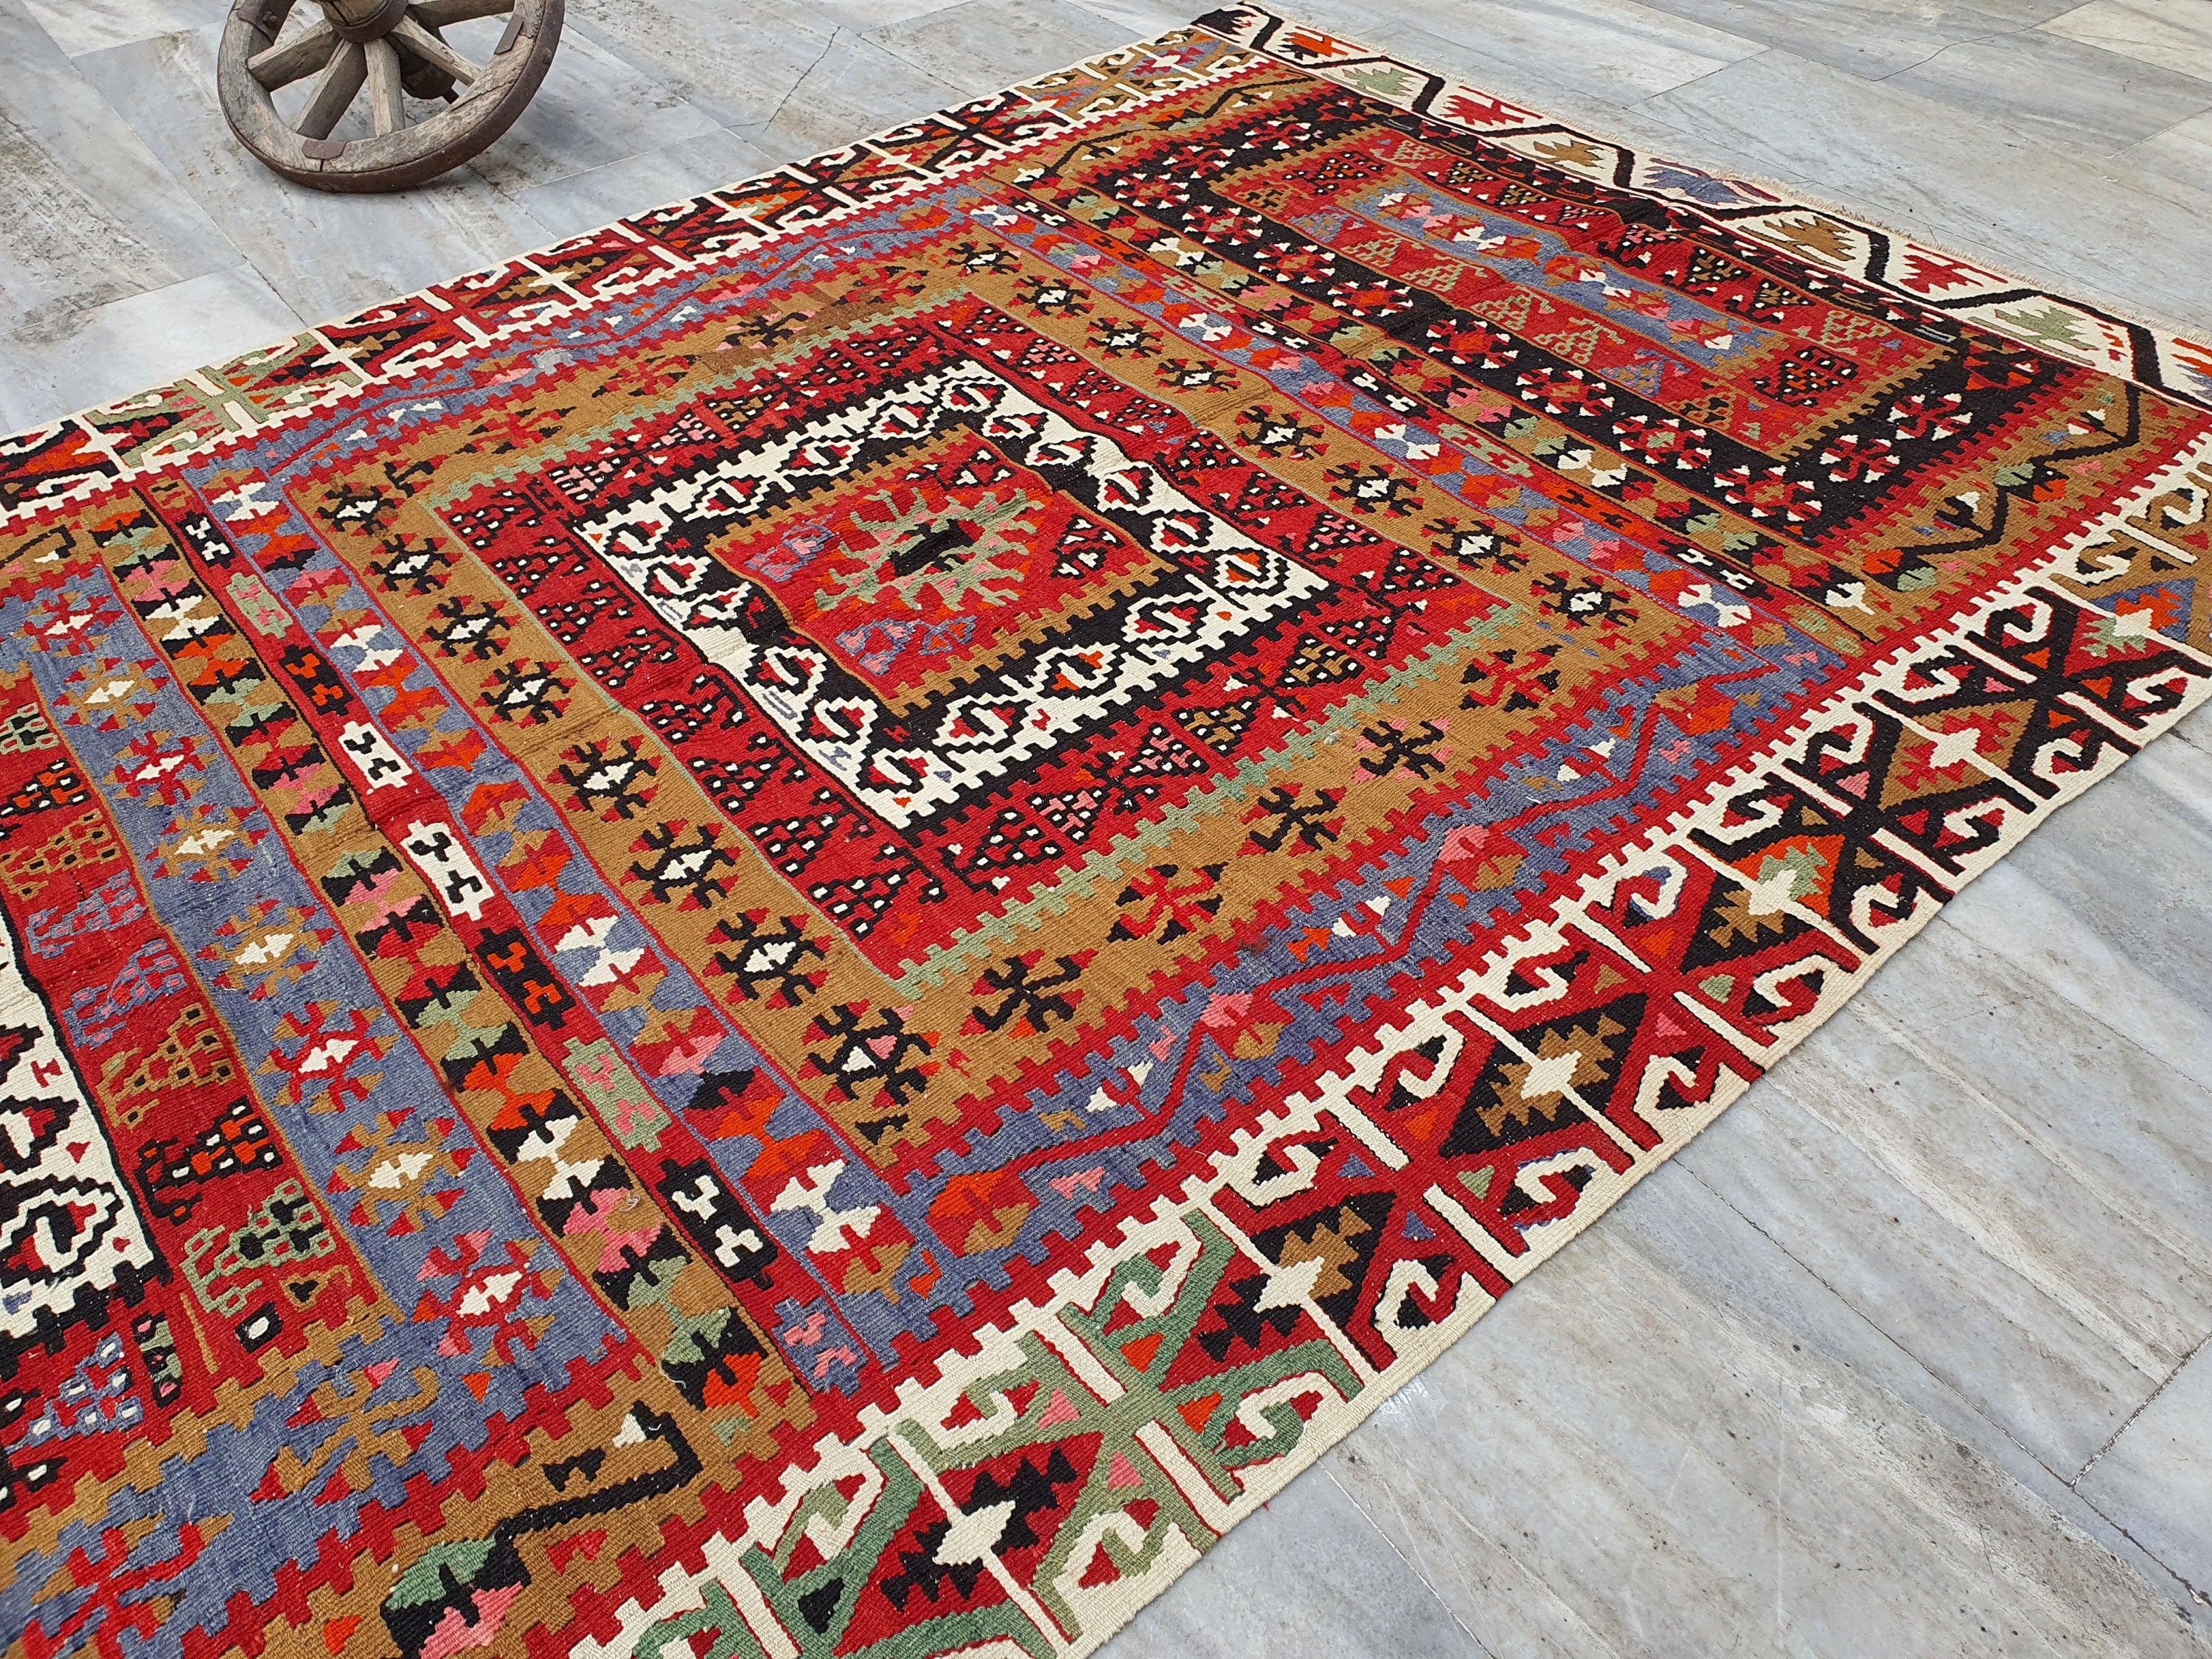 Kayseri Turkish Kilim Rug, Handmade Organic Wool Vintage Rug, Boho Rustic Anatolian Home Decor, Moroccan Carpet Persian Area Rug 11'7"x5'2"